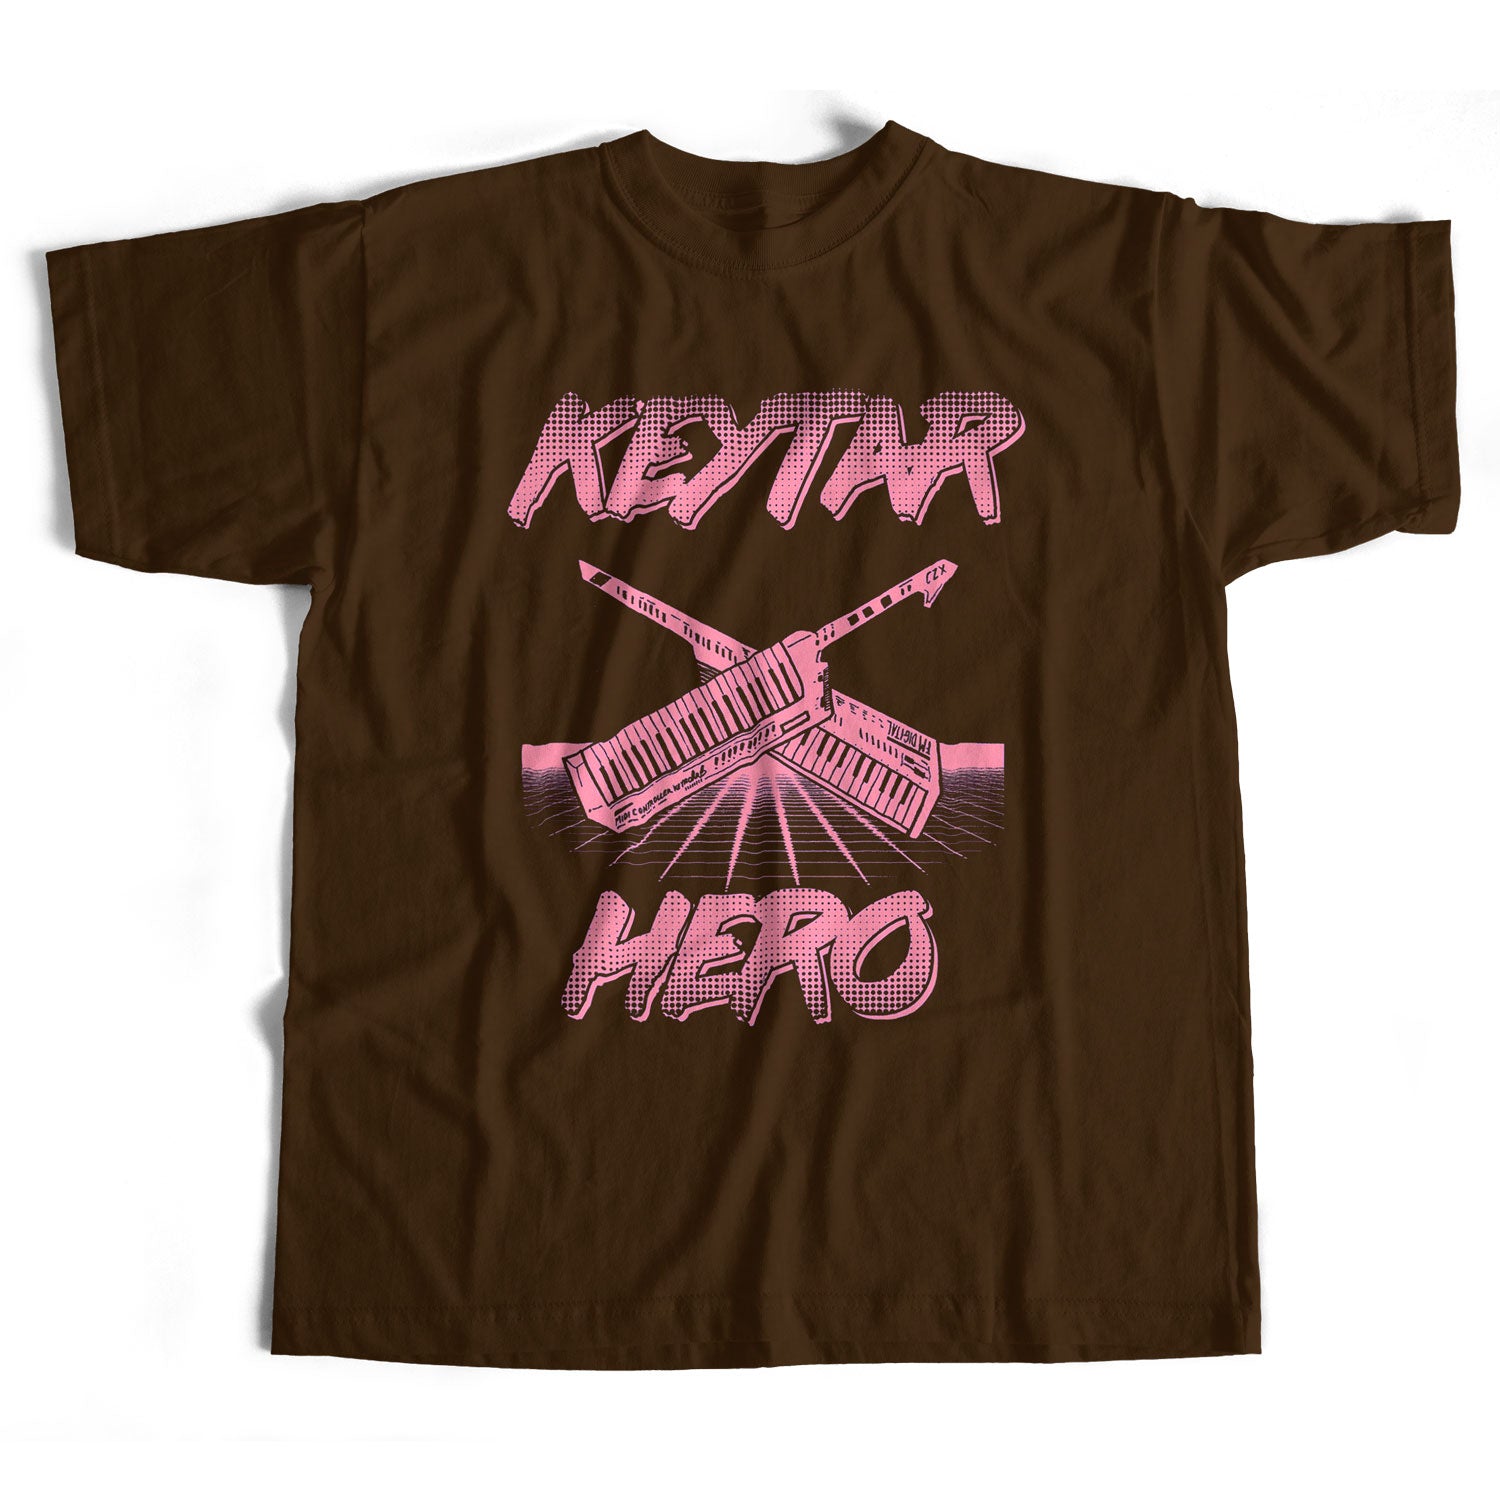 Old Skool Hooligans Keytar Hero T Shirt - An 80's Synth Classic